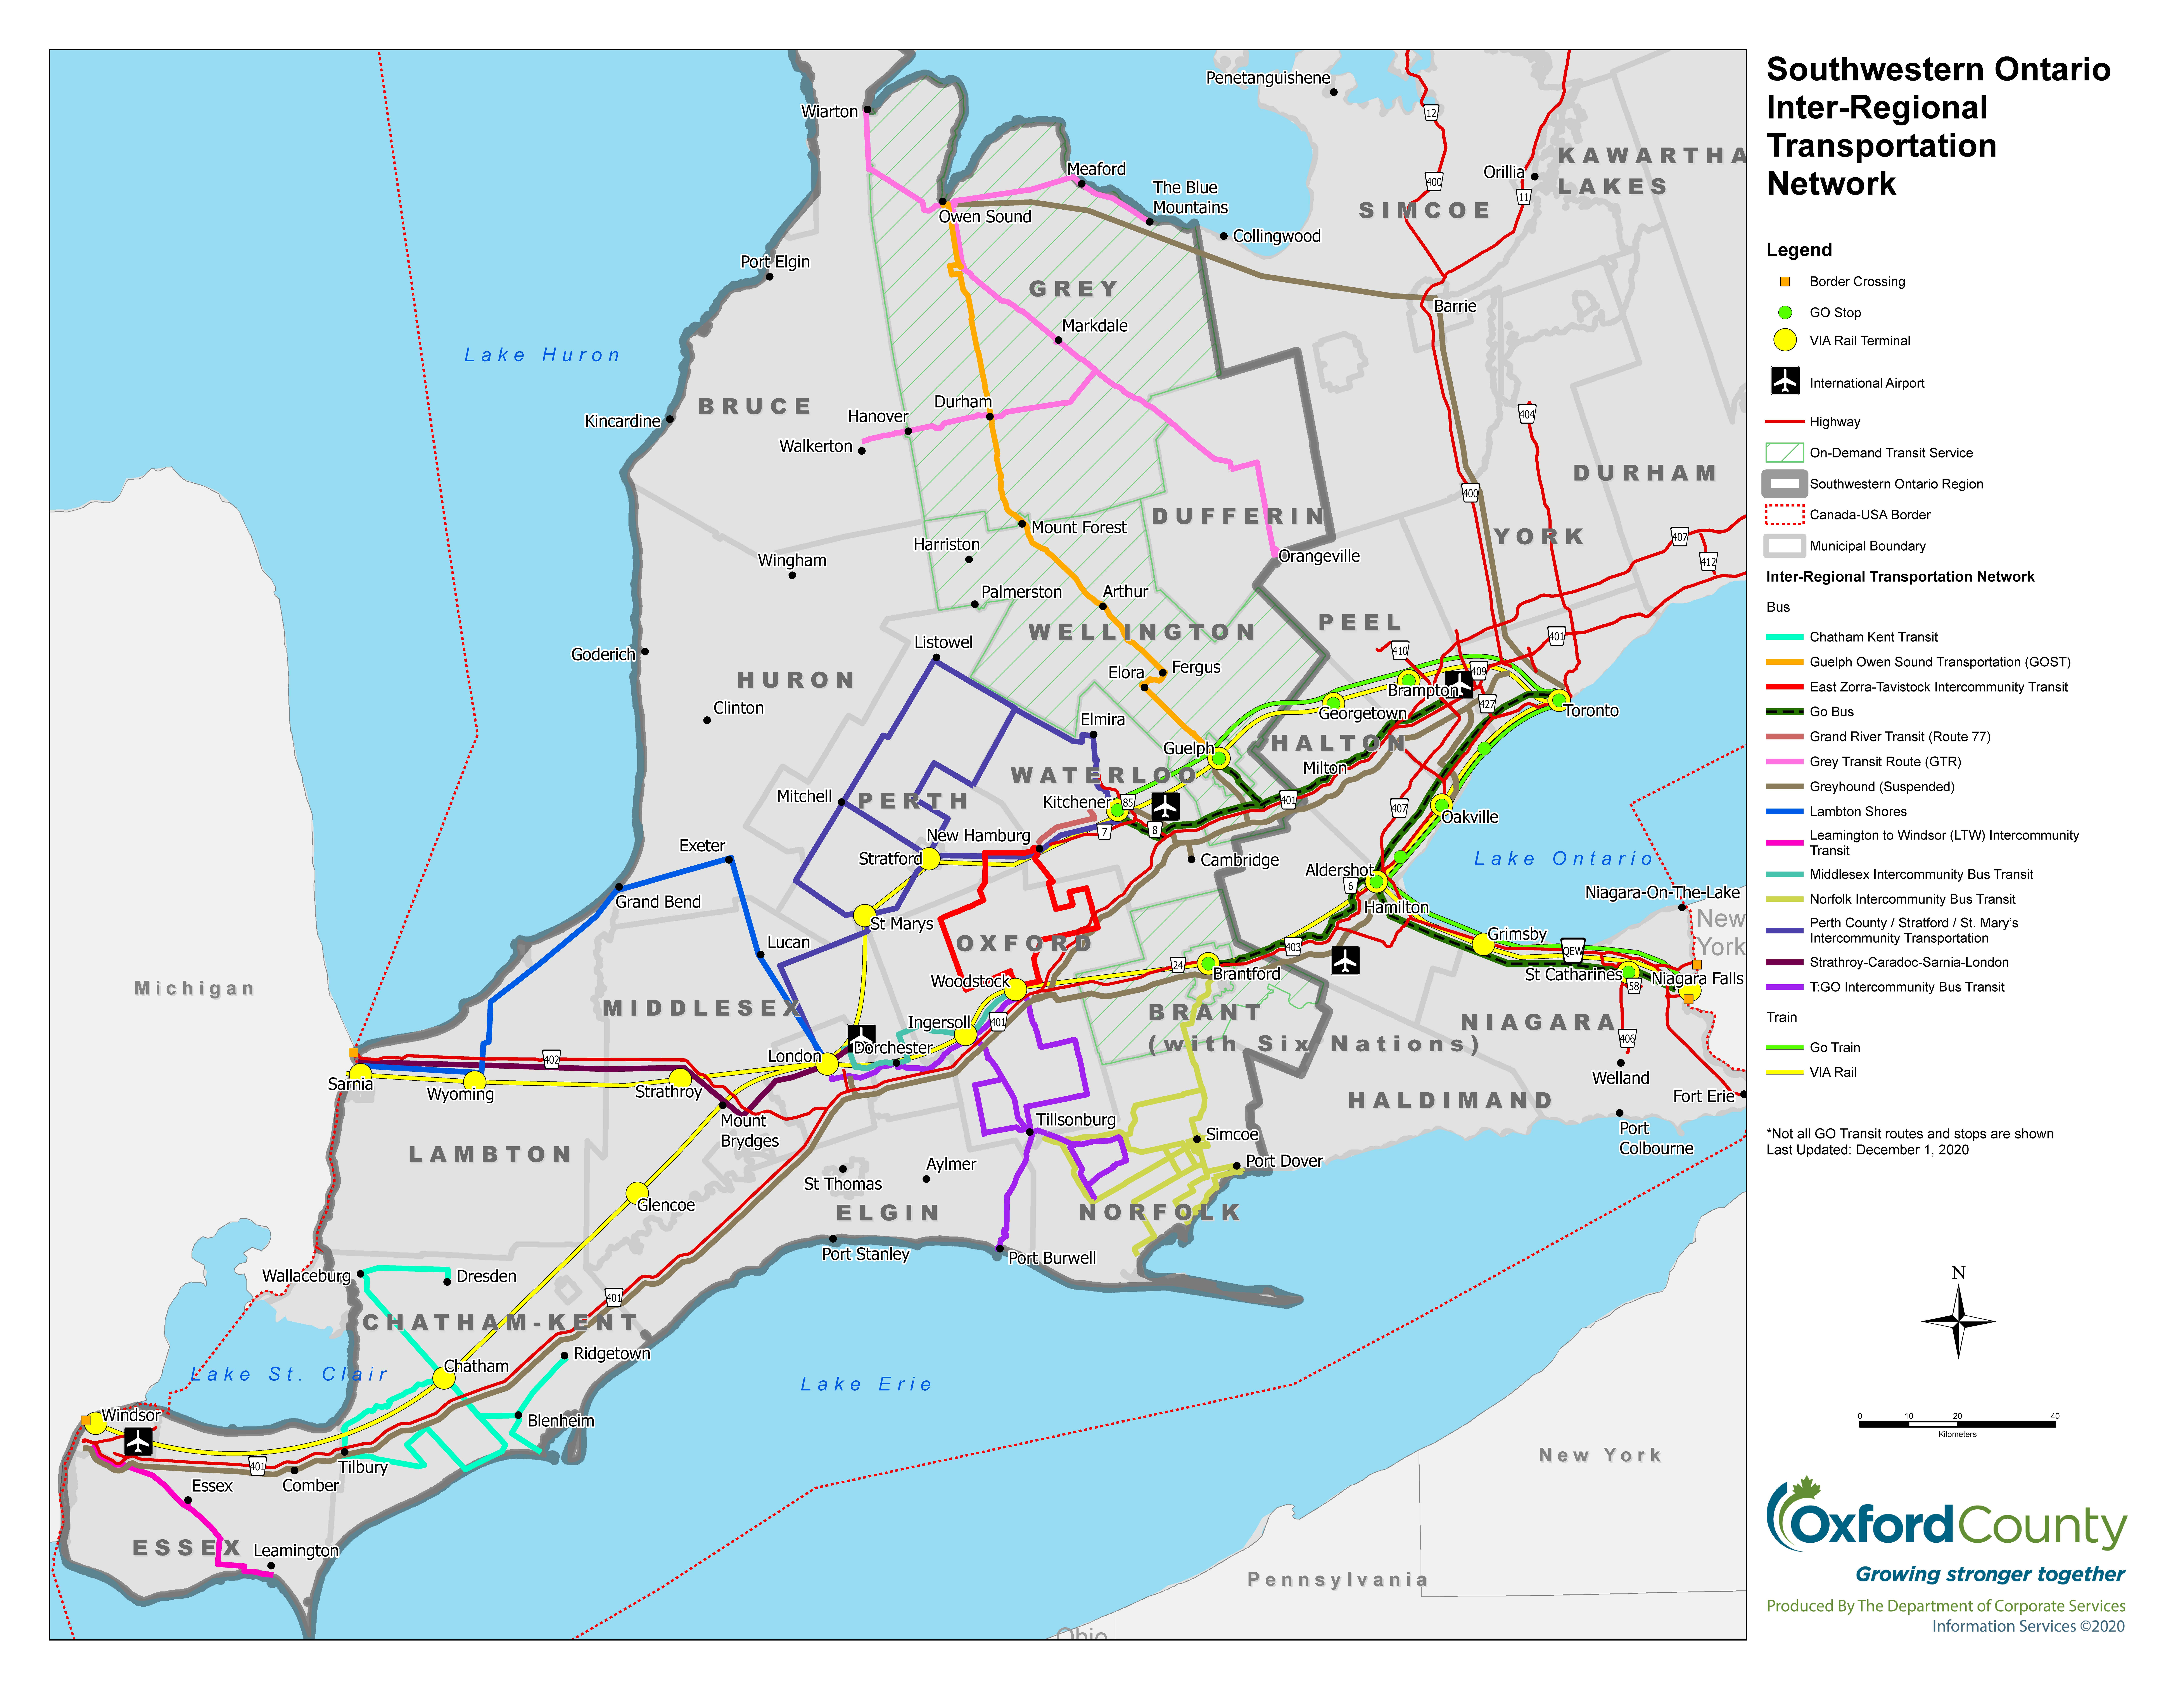 Southwestern Ontario Inter-Regional Transportation Network